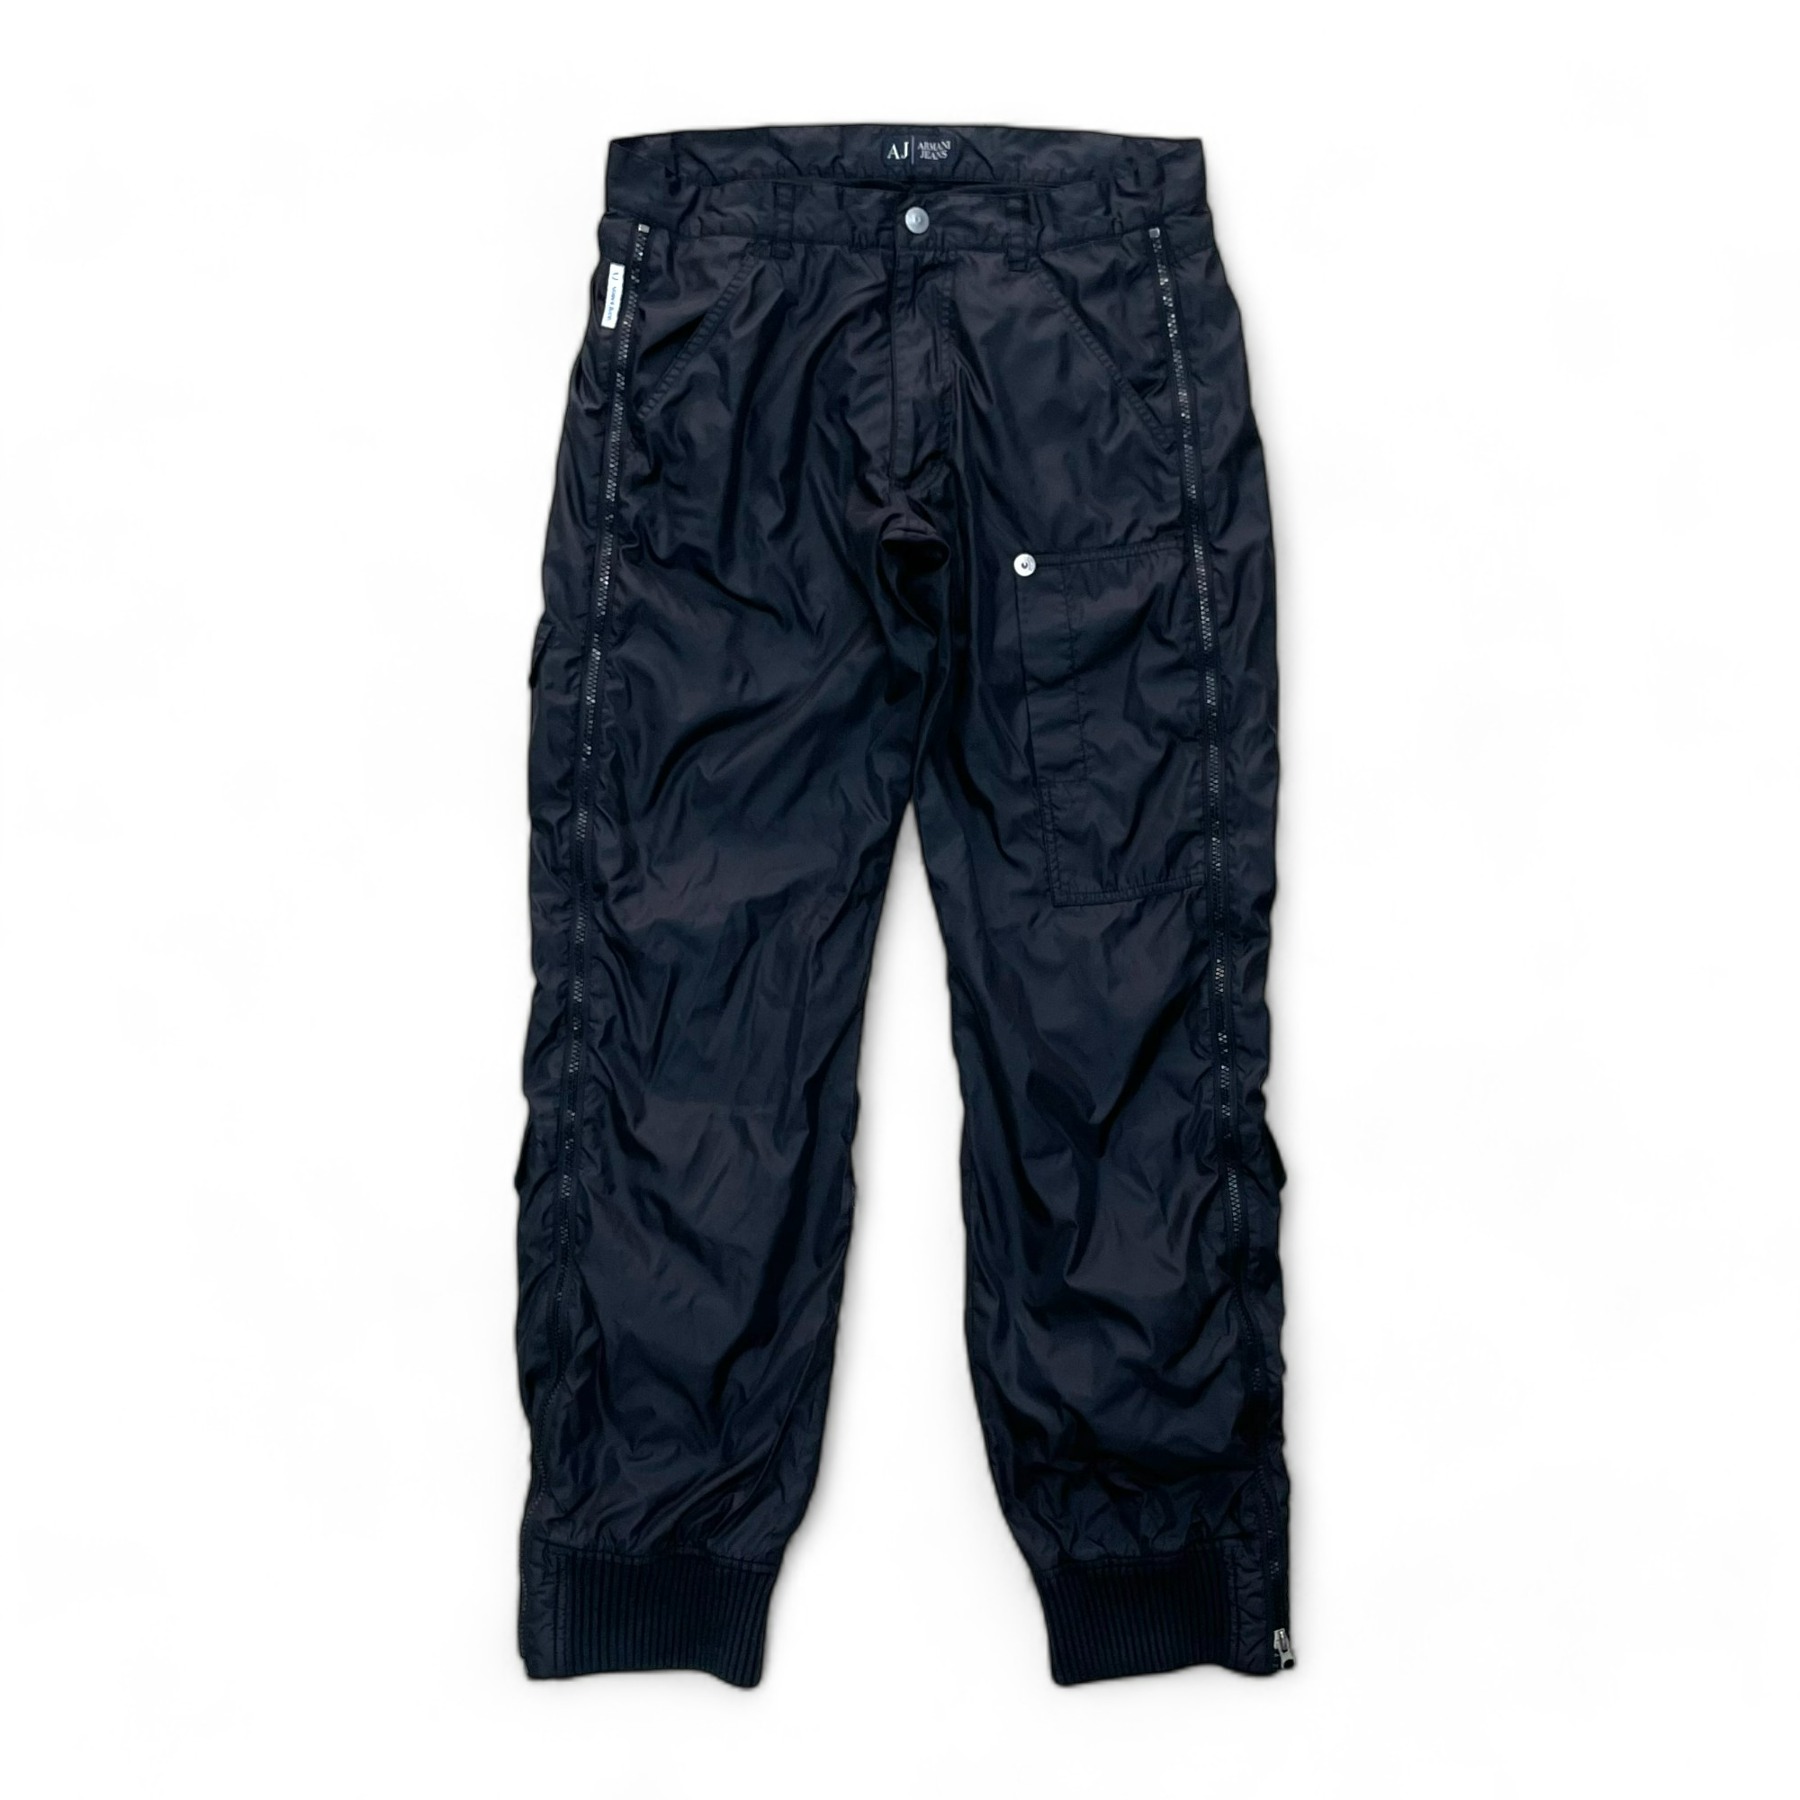 Armani Jeans Side Zip Pants - 32inch